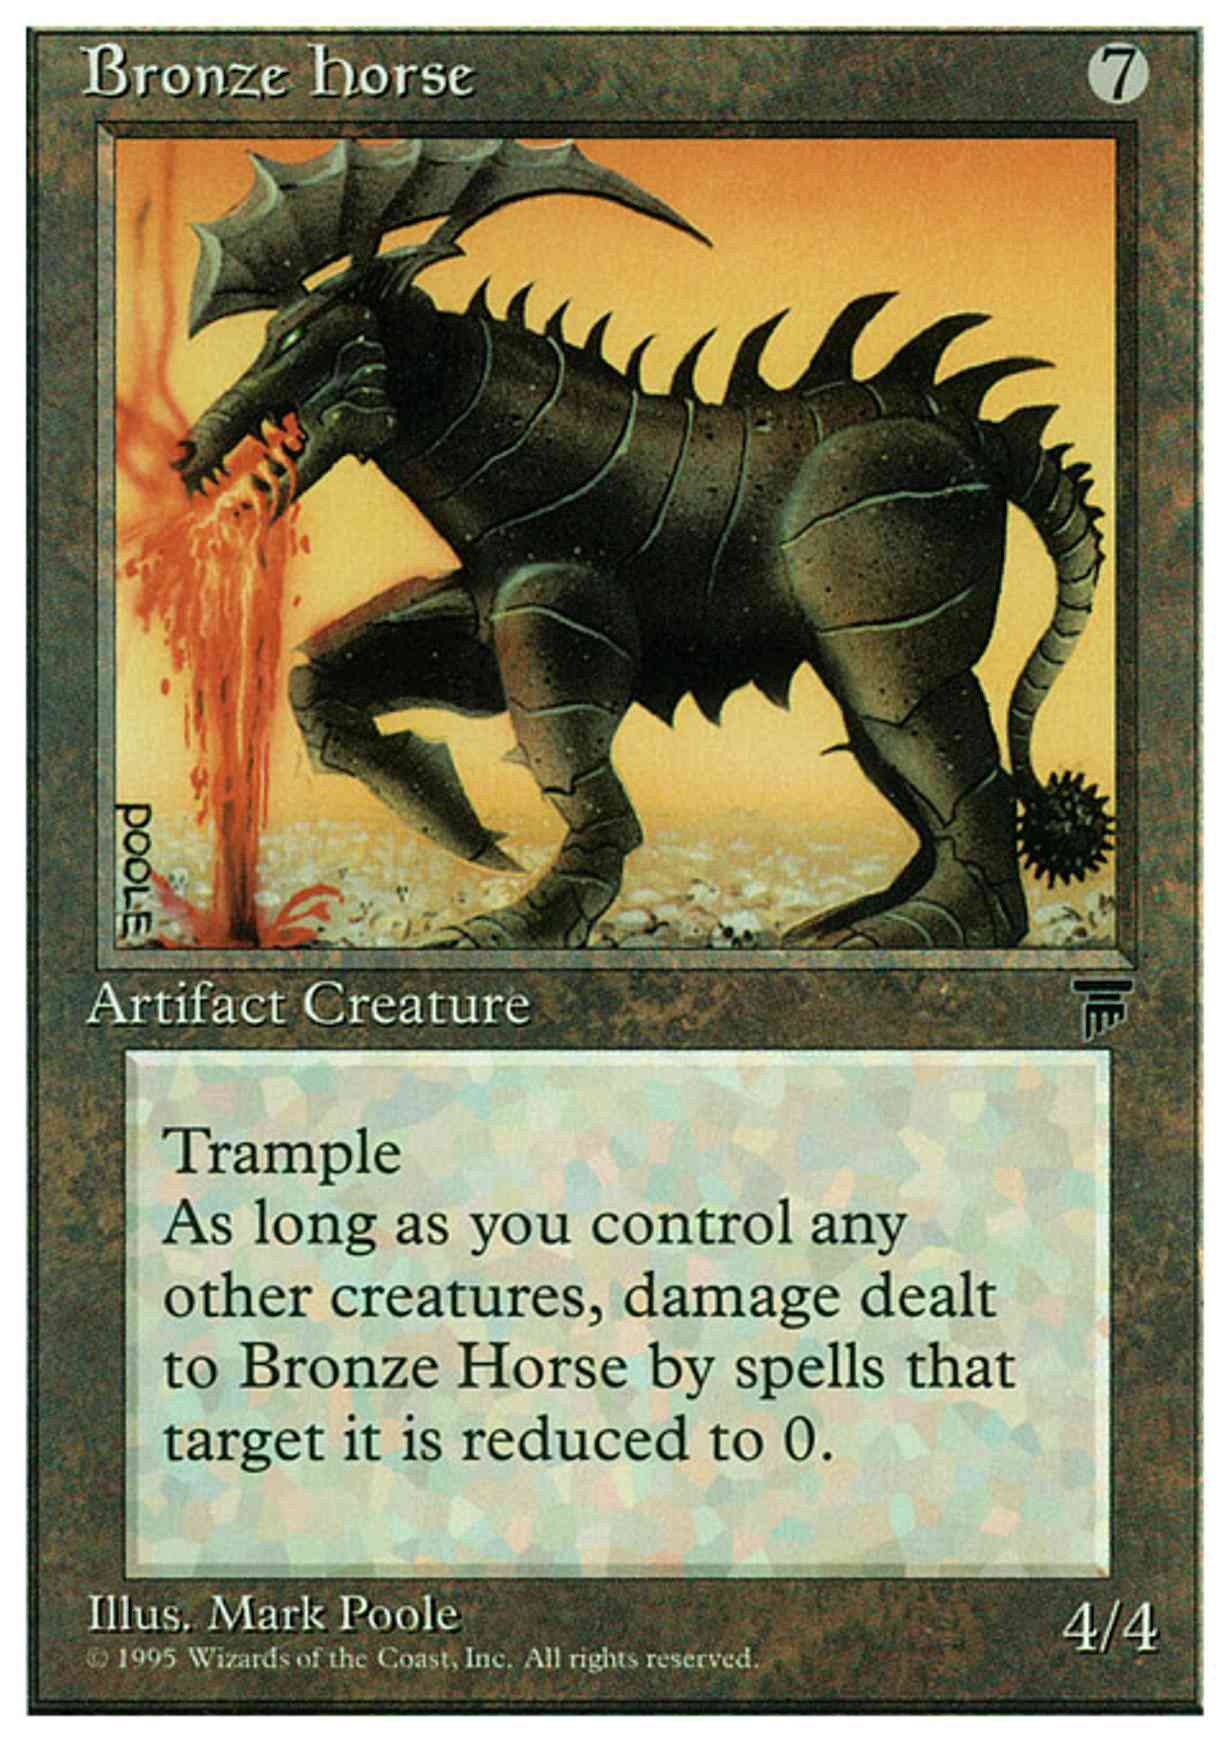 Bronze Horse magic card front